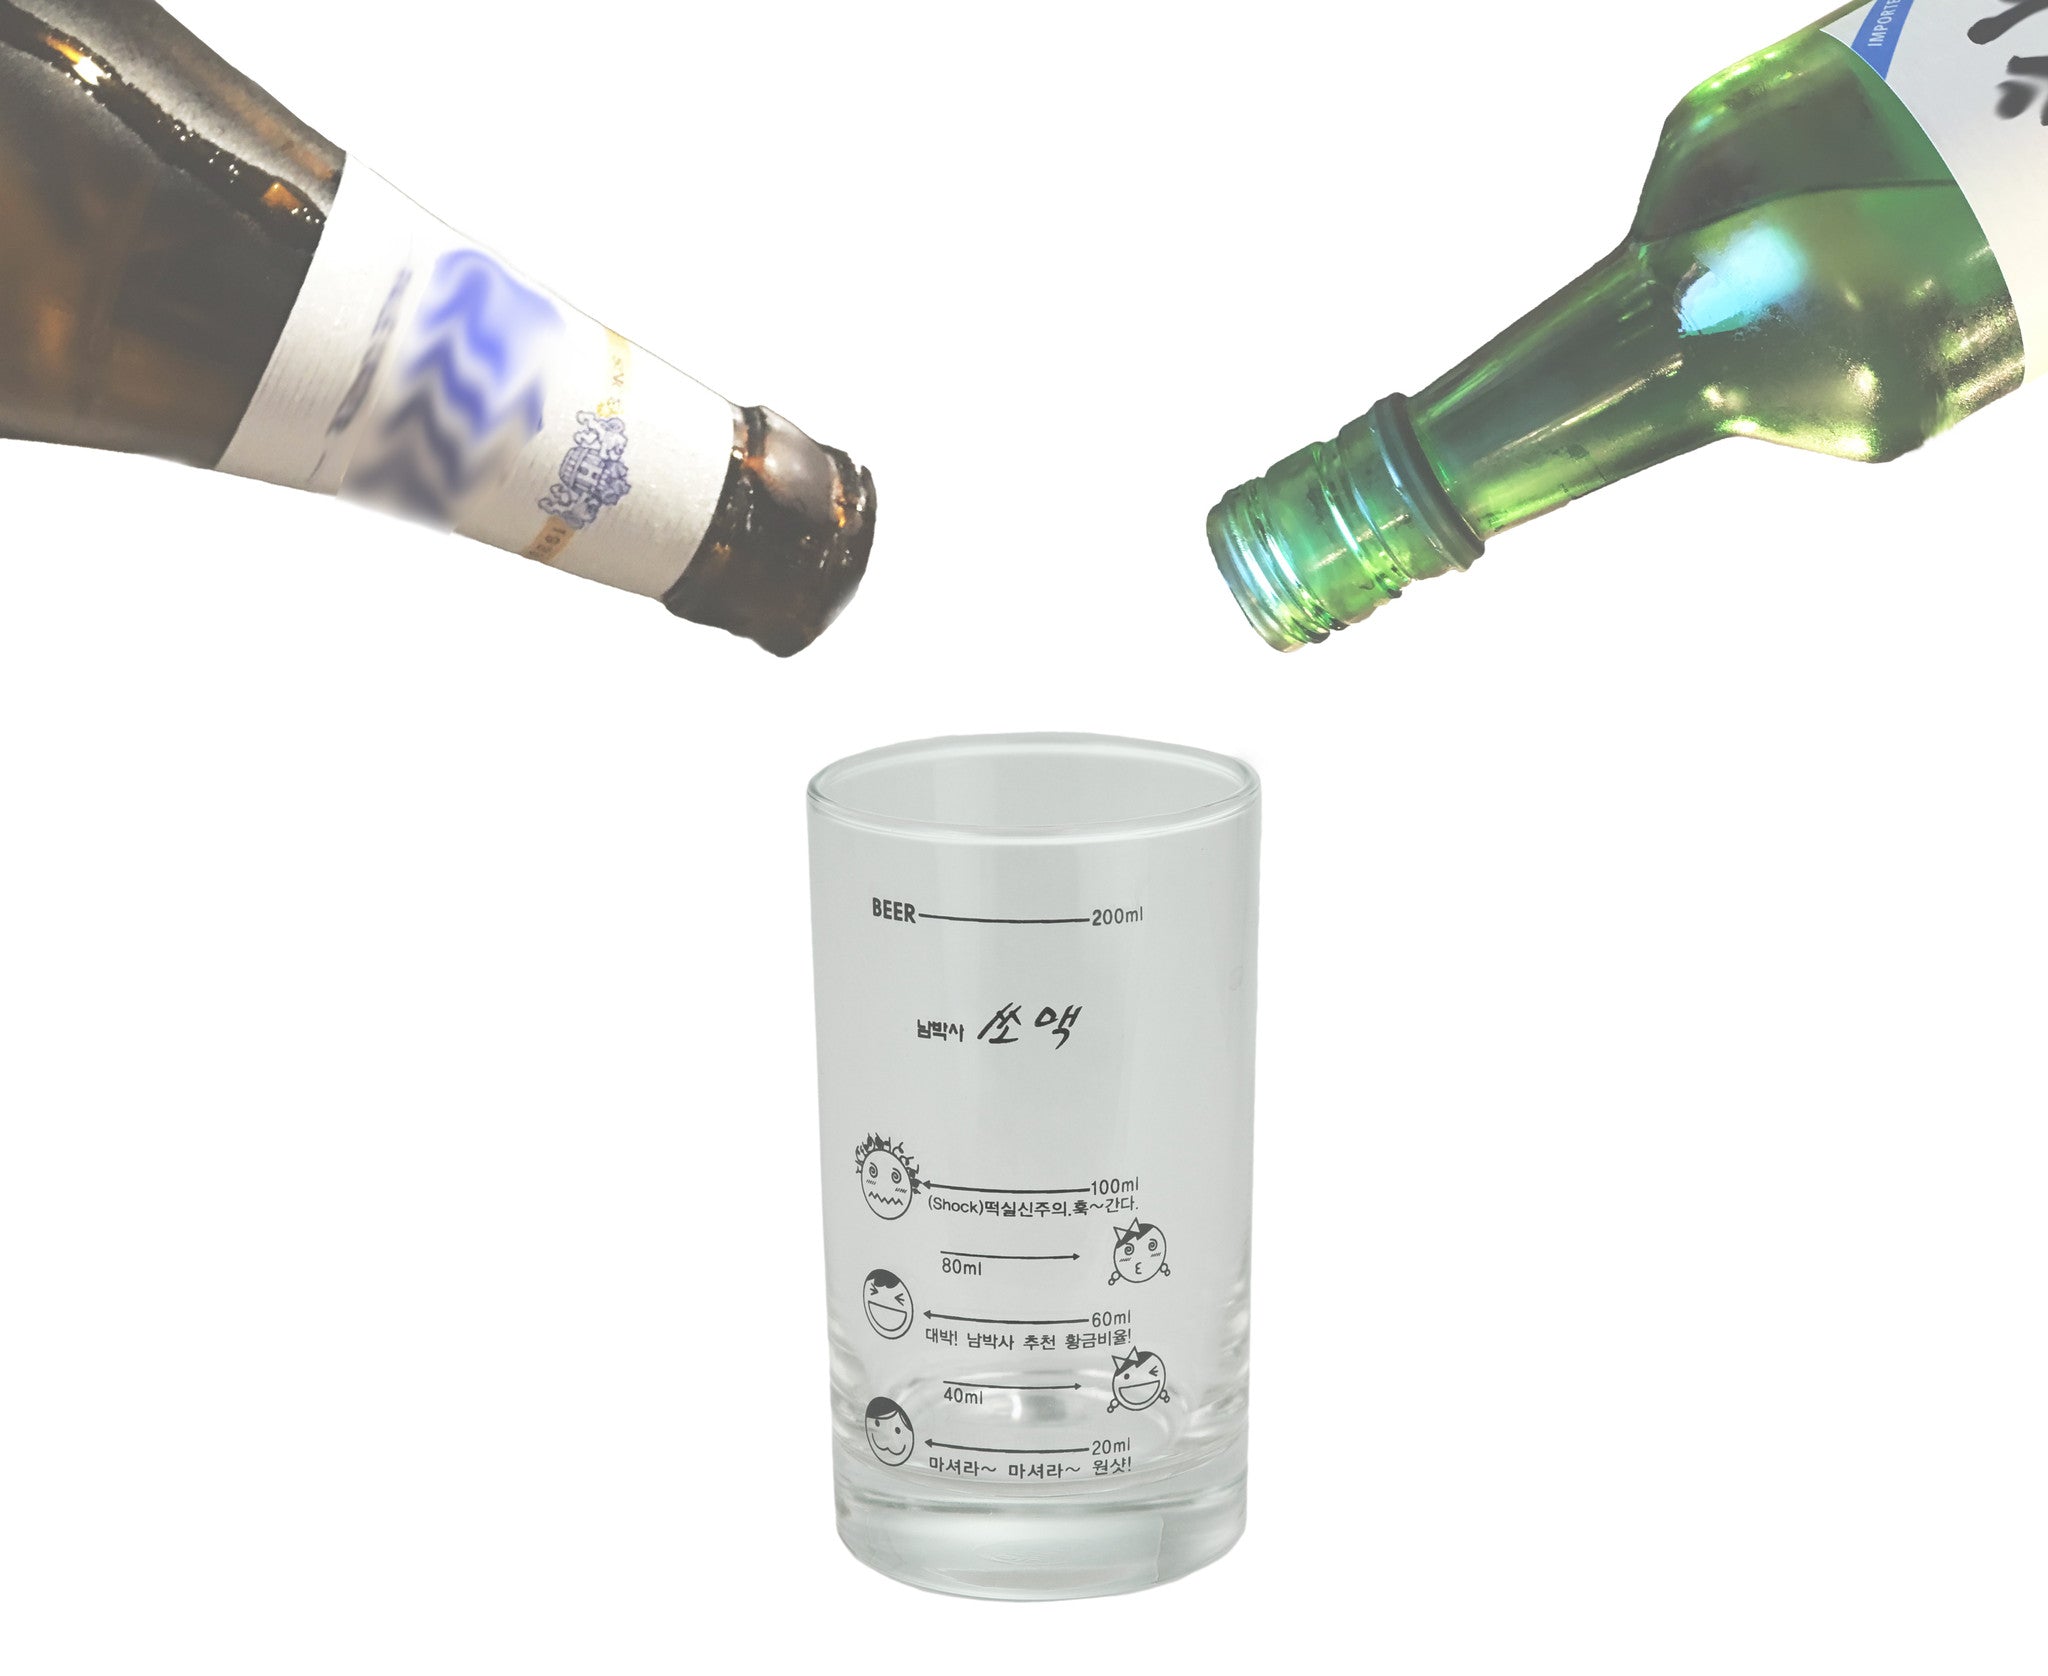 Jinro Hite 6oz Terra Beer or Somak Glass Measure Cup (Limited)